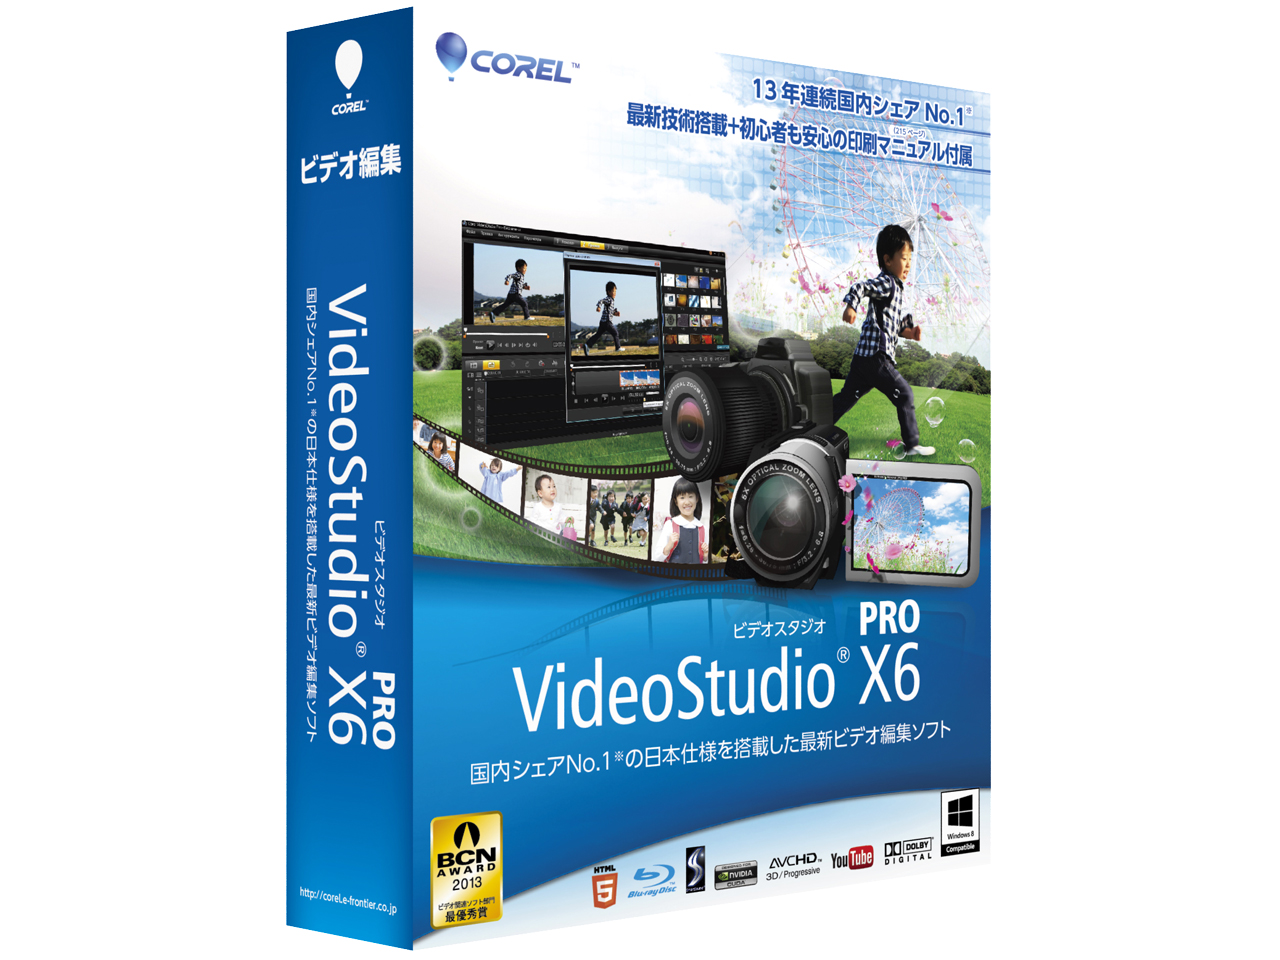 VideoStudio Pro X6 通常版 の製品画像